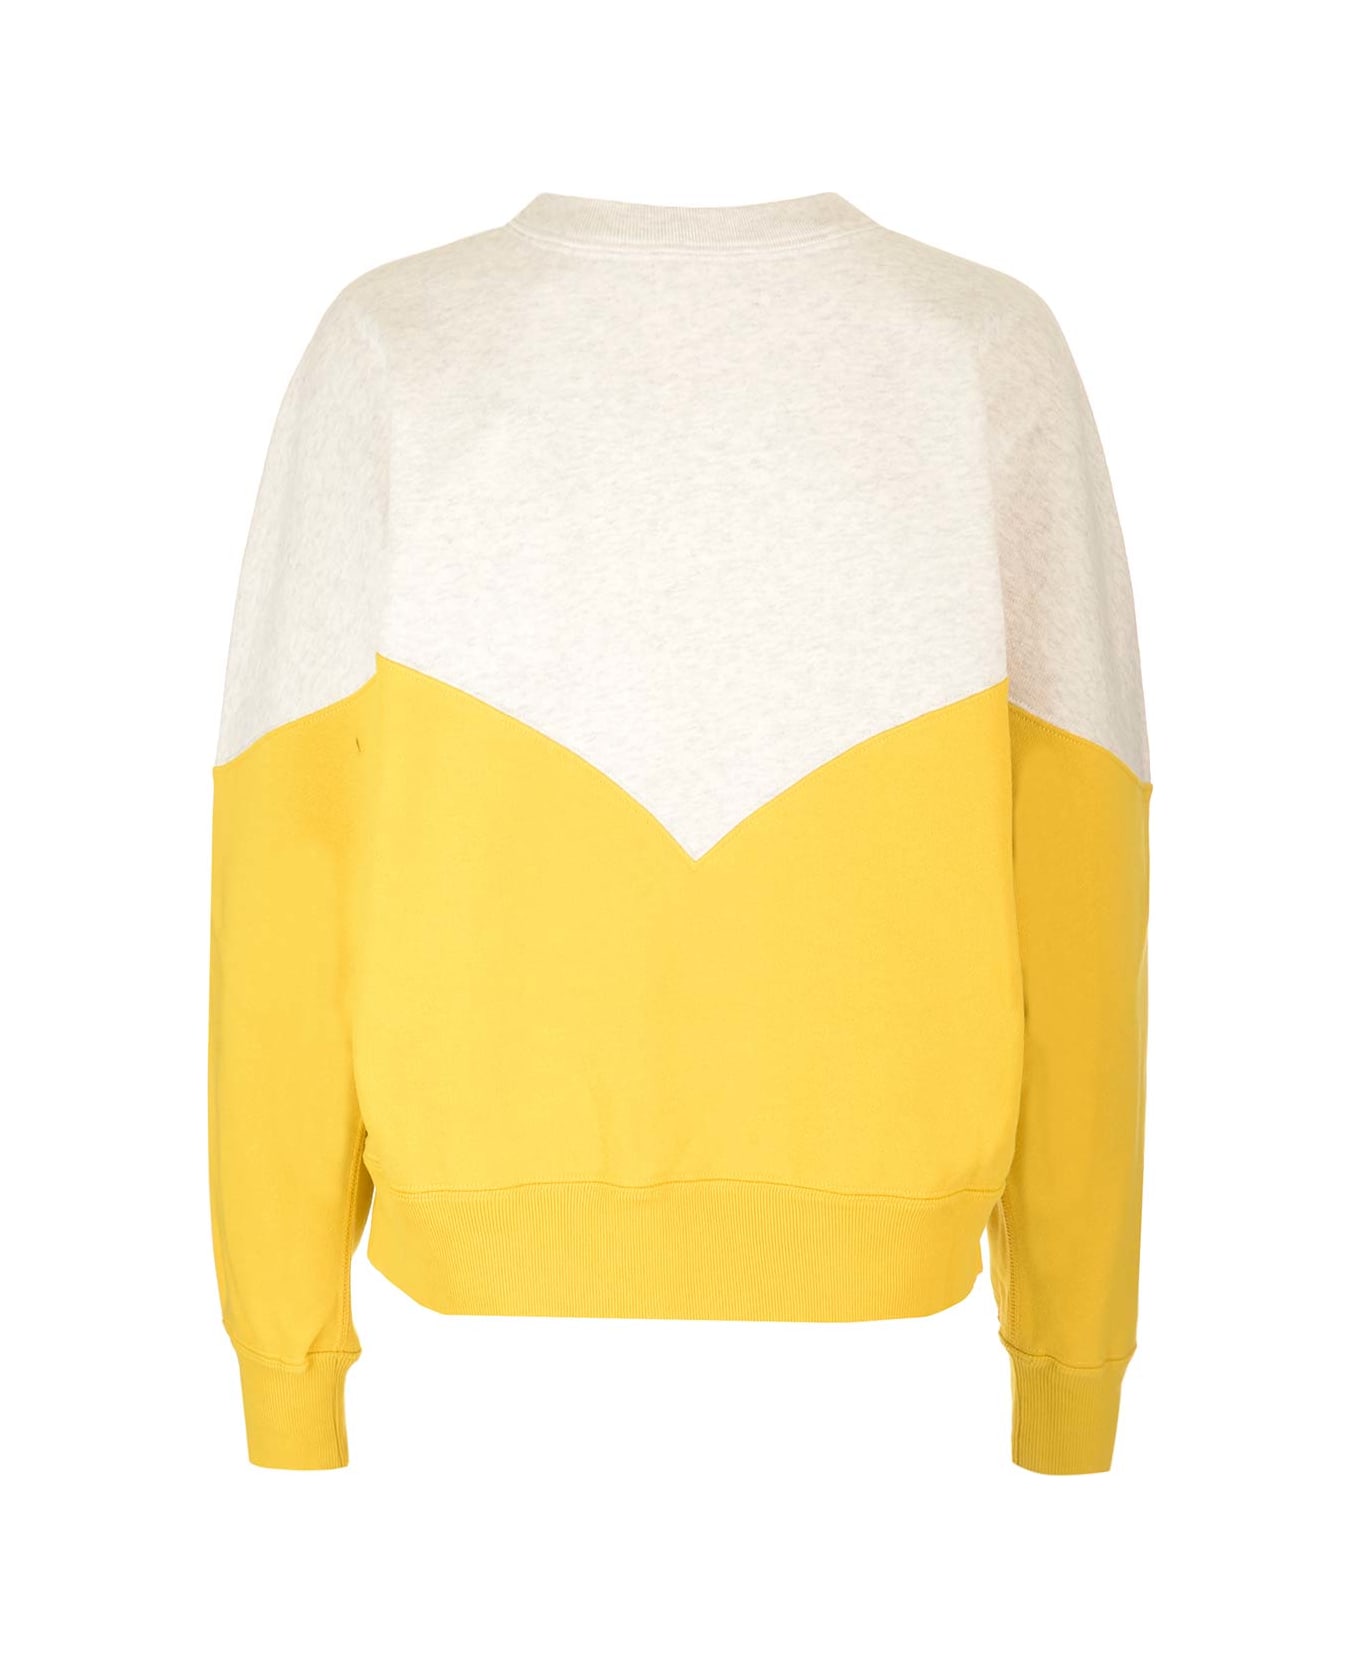 Marant Étoile Houston Sweatshirt - Yellow